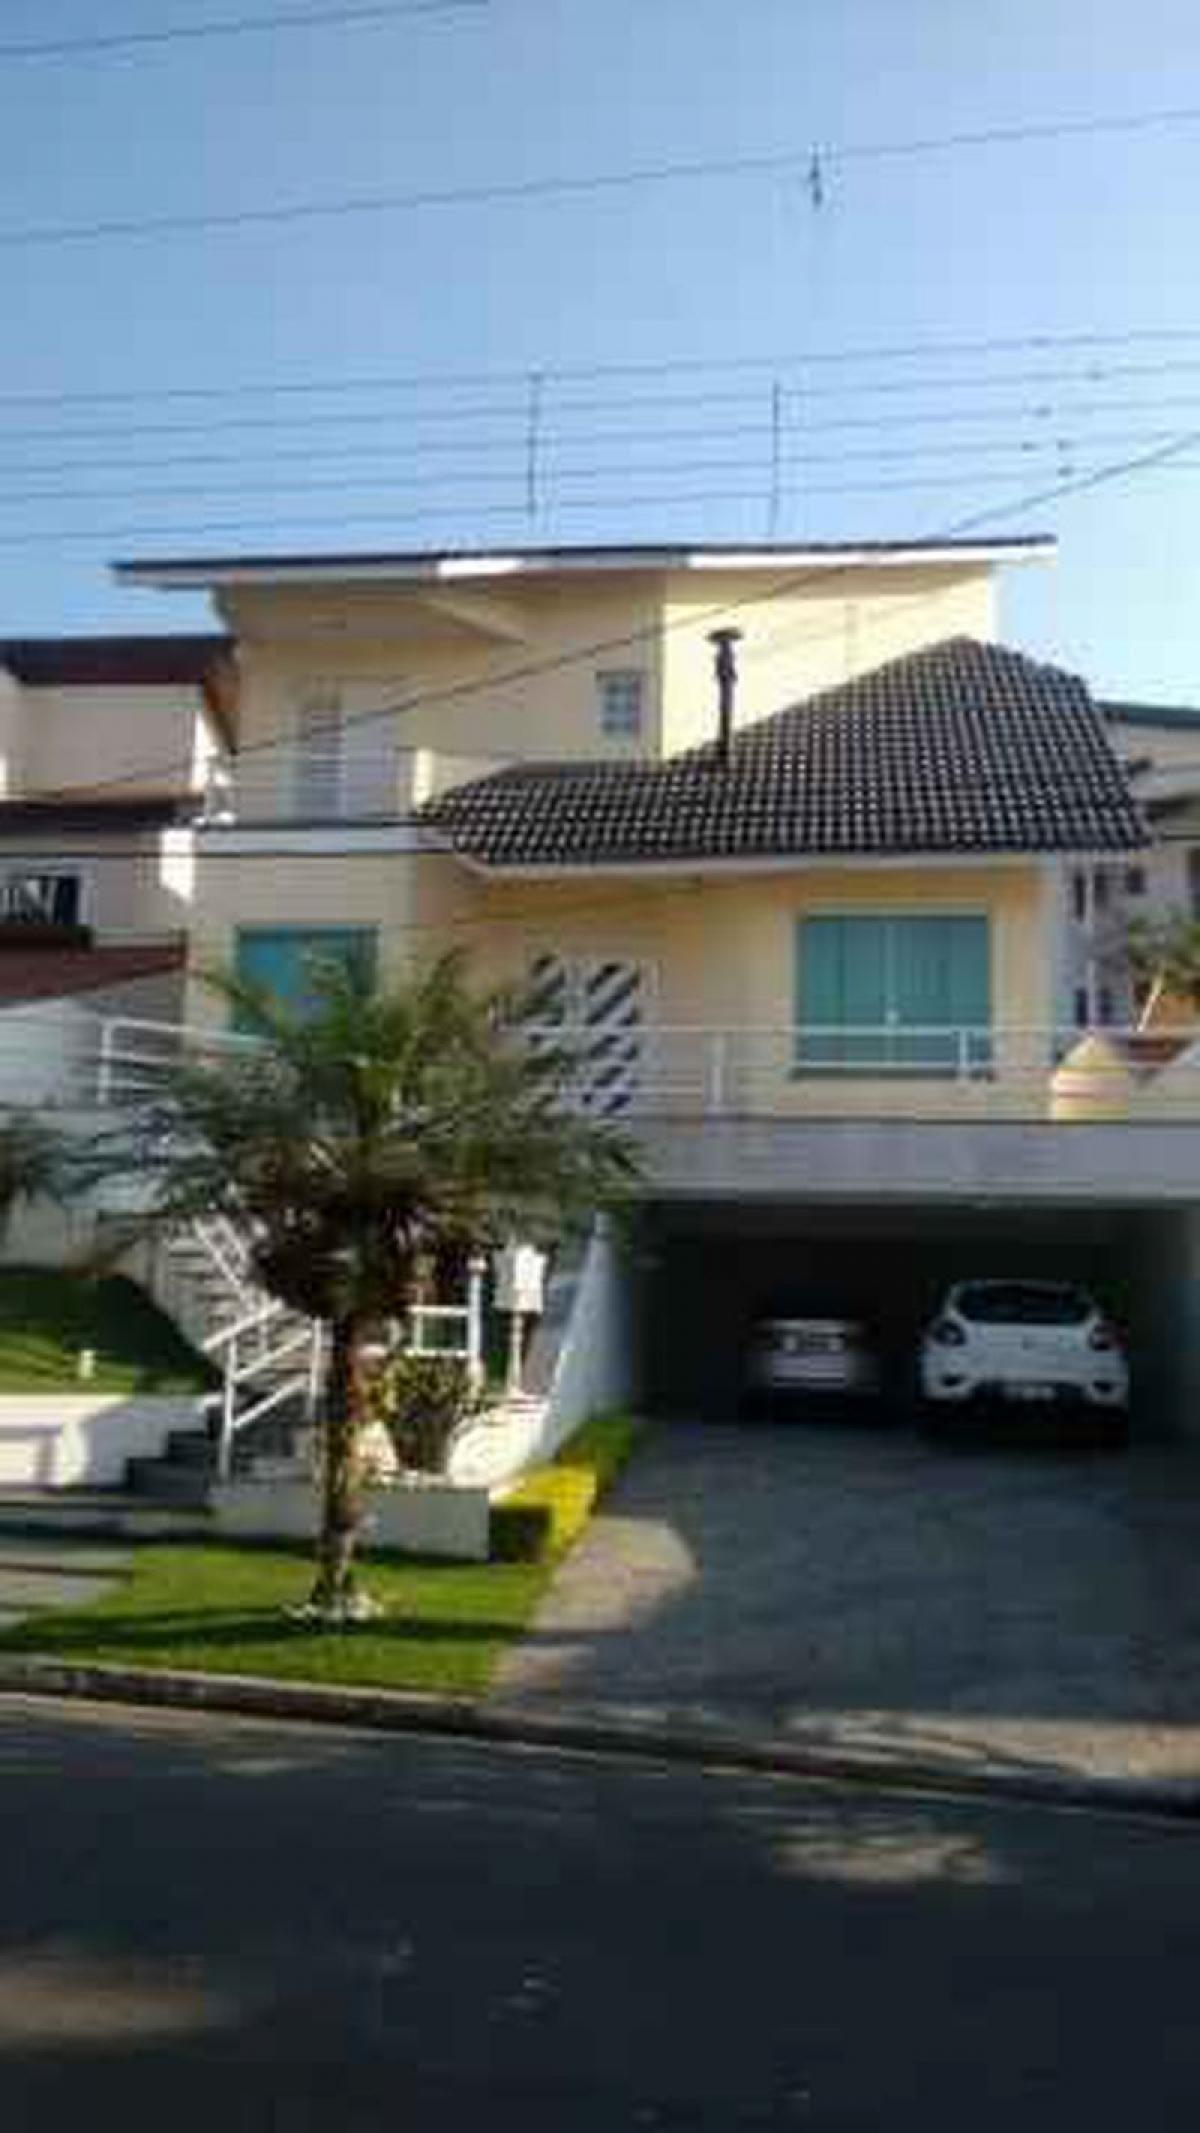 Picture of Home For Sale in Aruja, Sao Paulo, Brazil